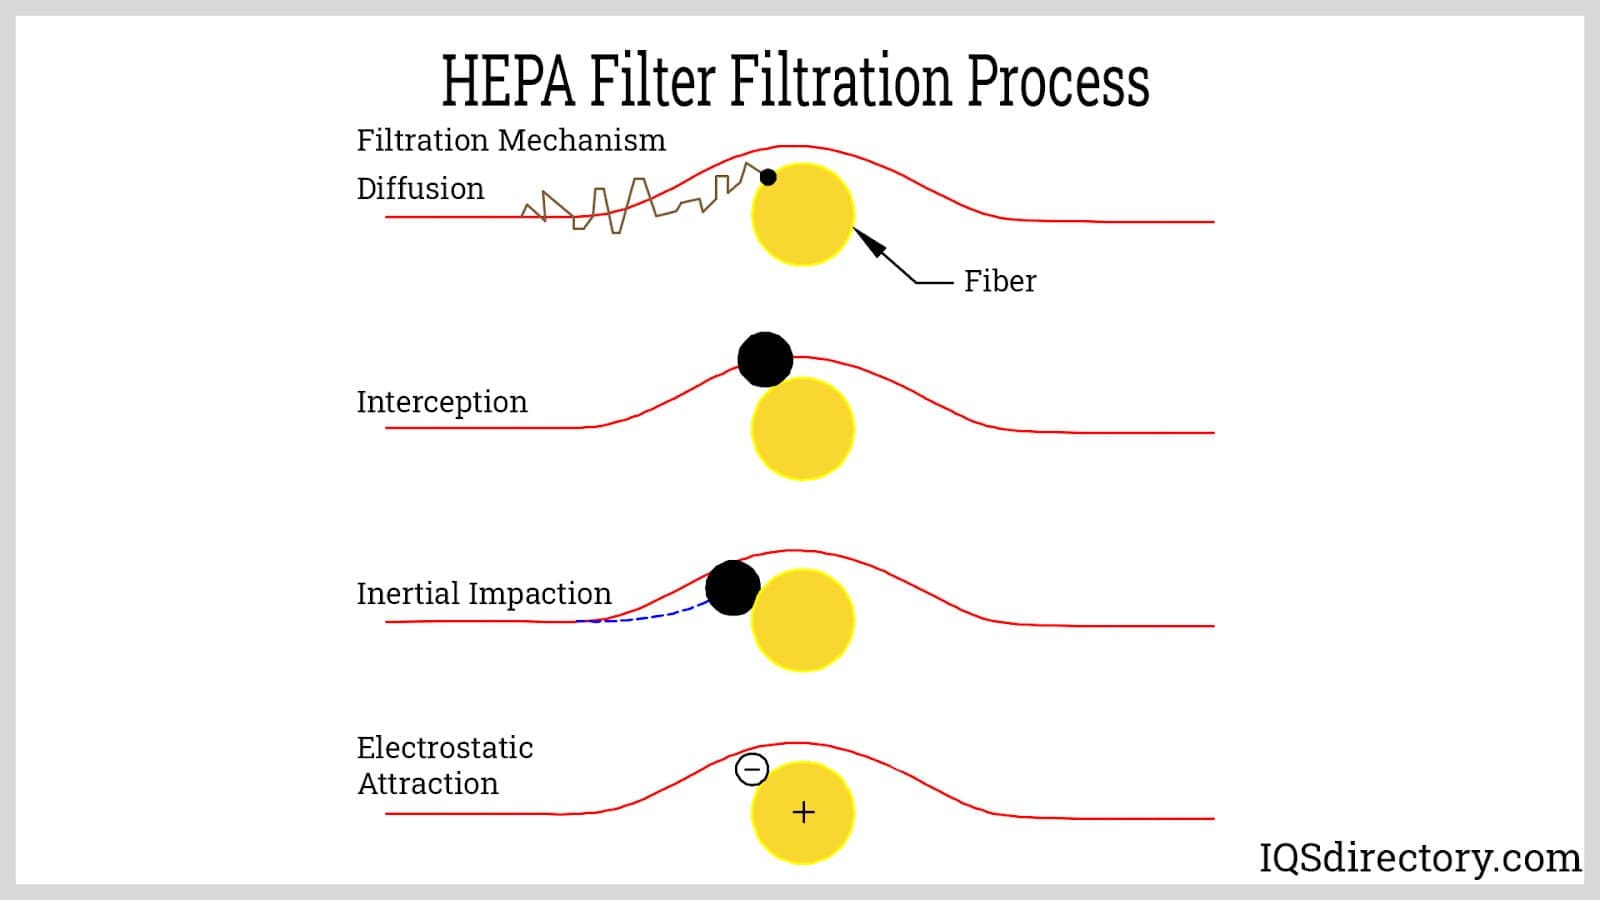 HEPA Filter Filtration Process